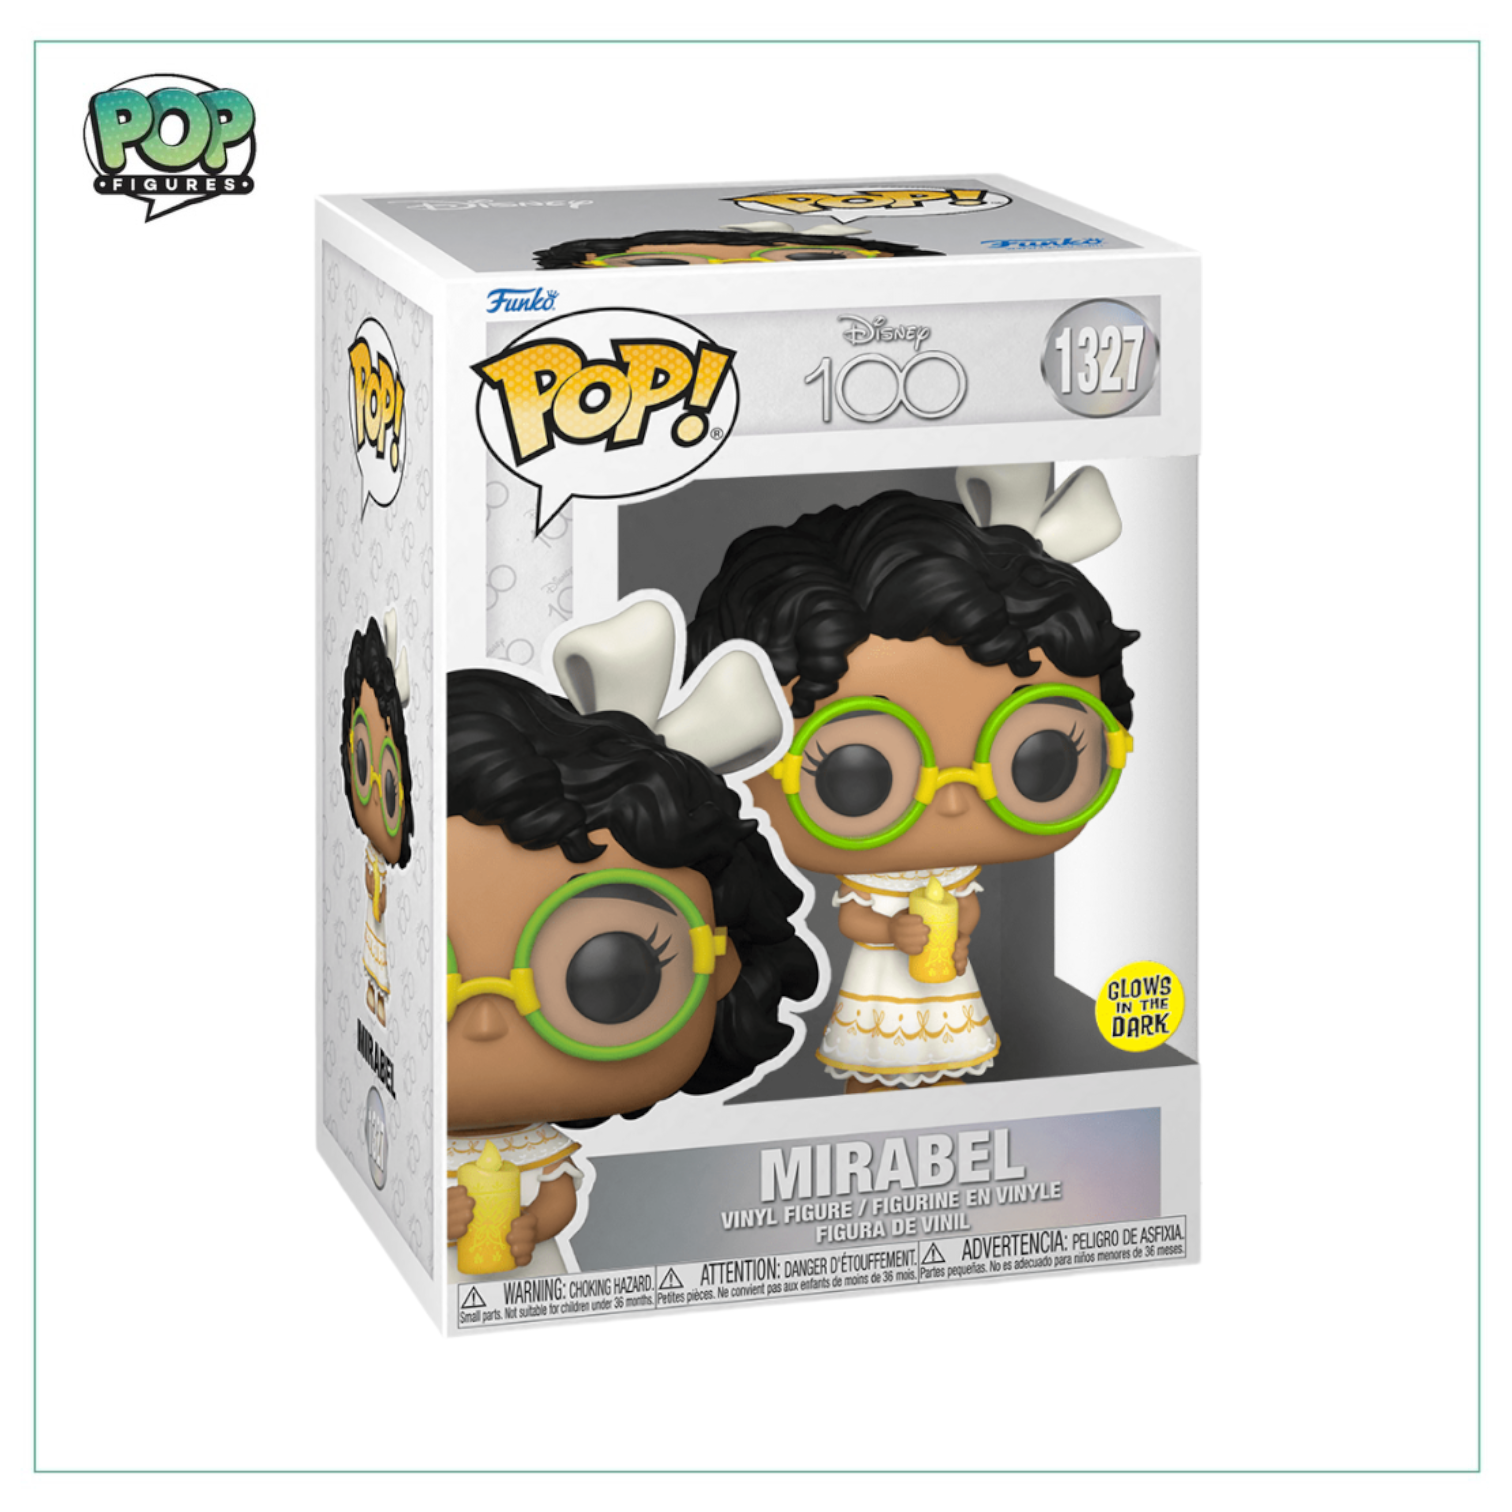 Mirabel (GITD) #1327 Funko Pop! Disney 100th